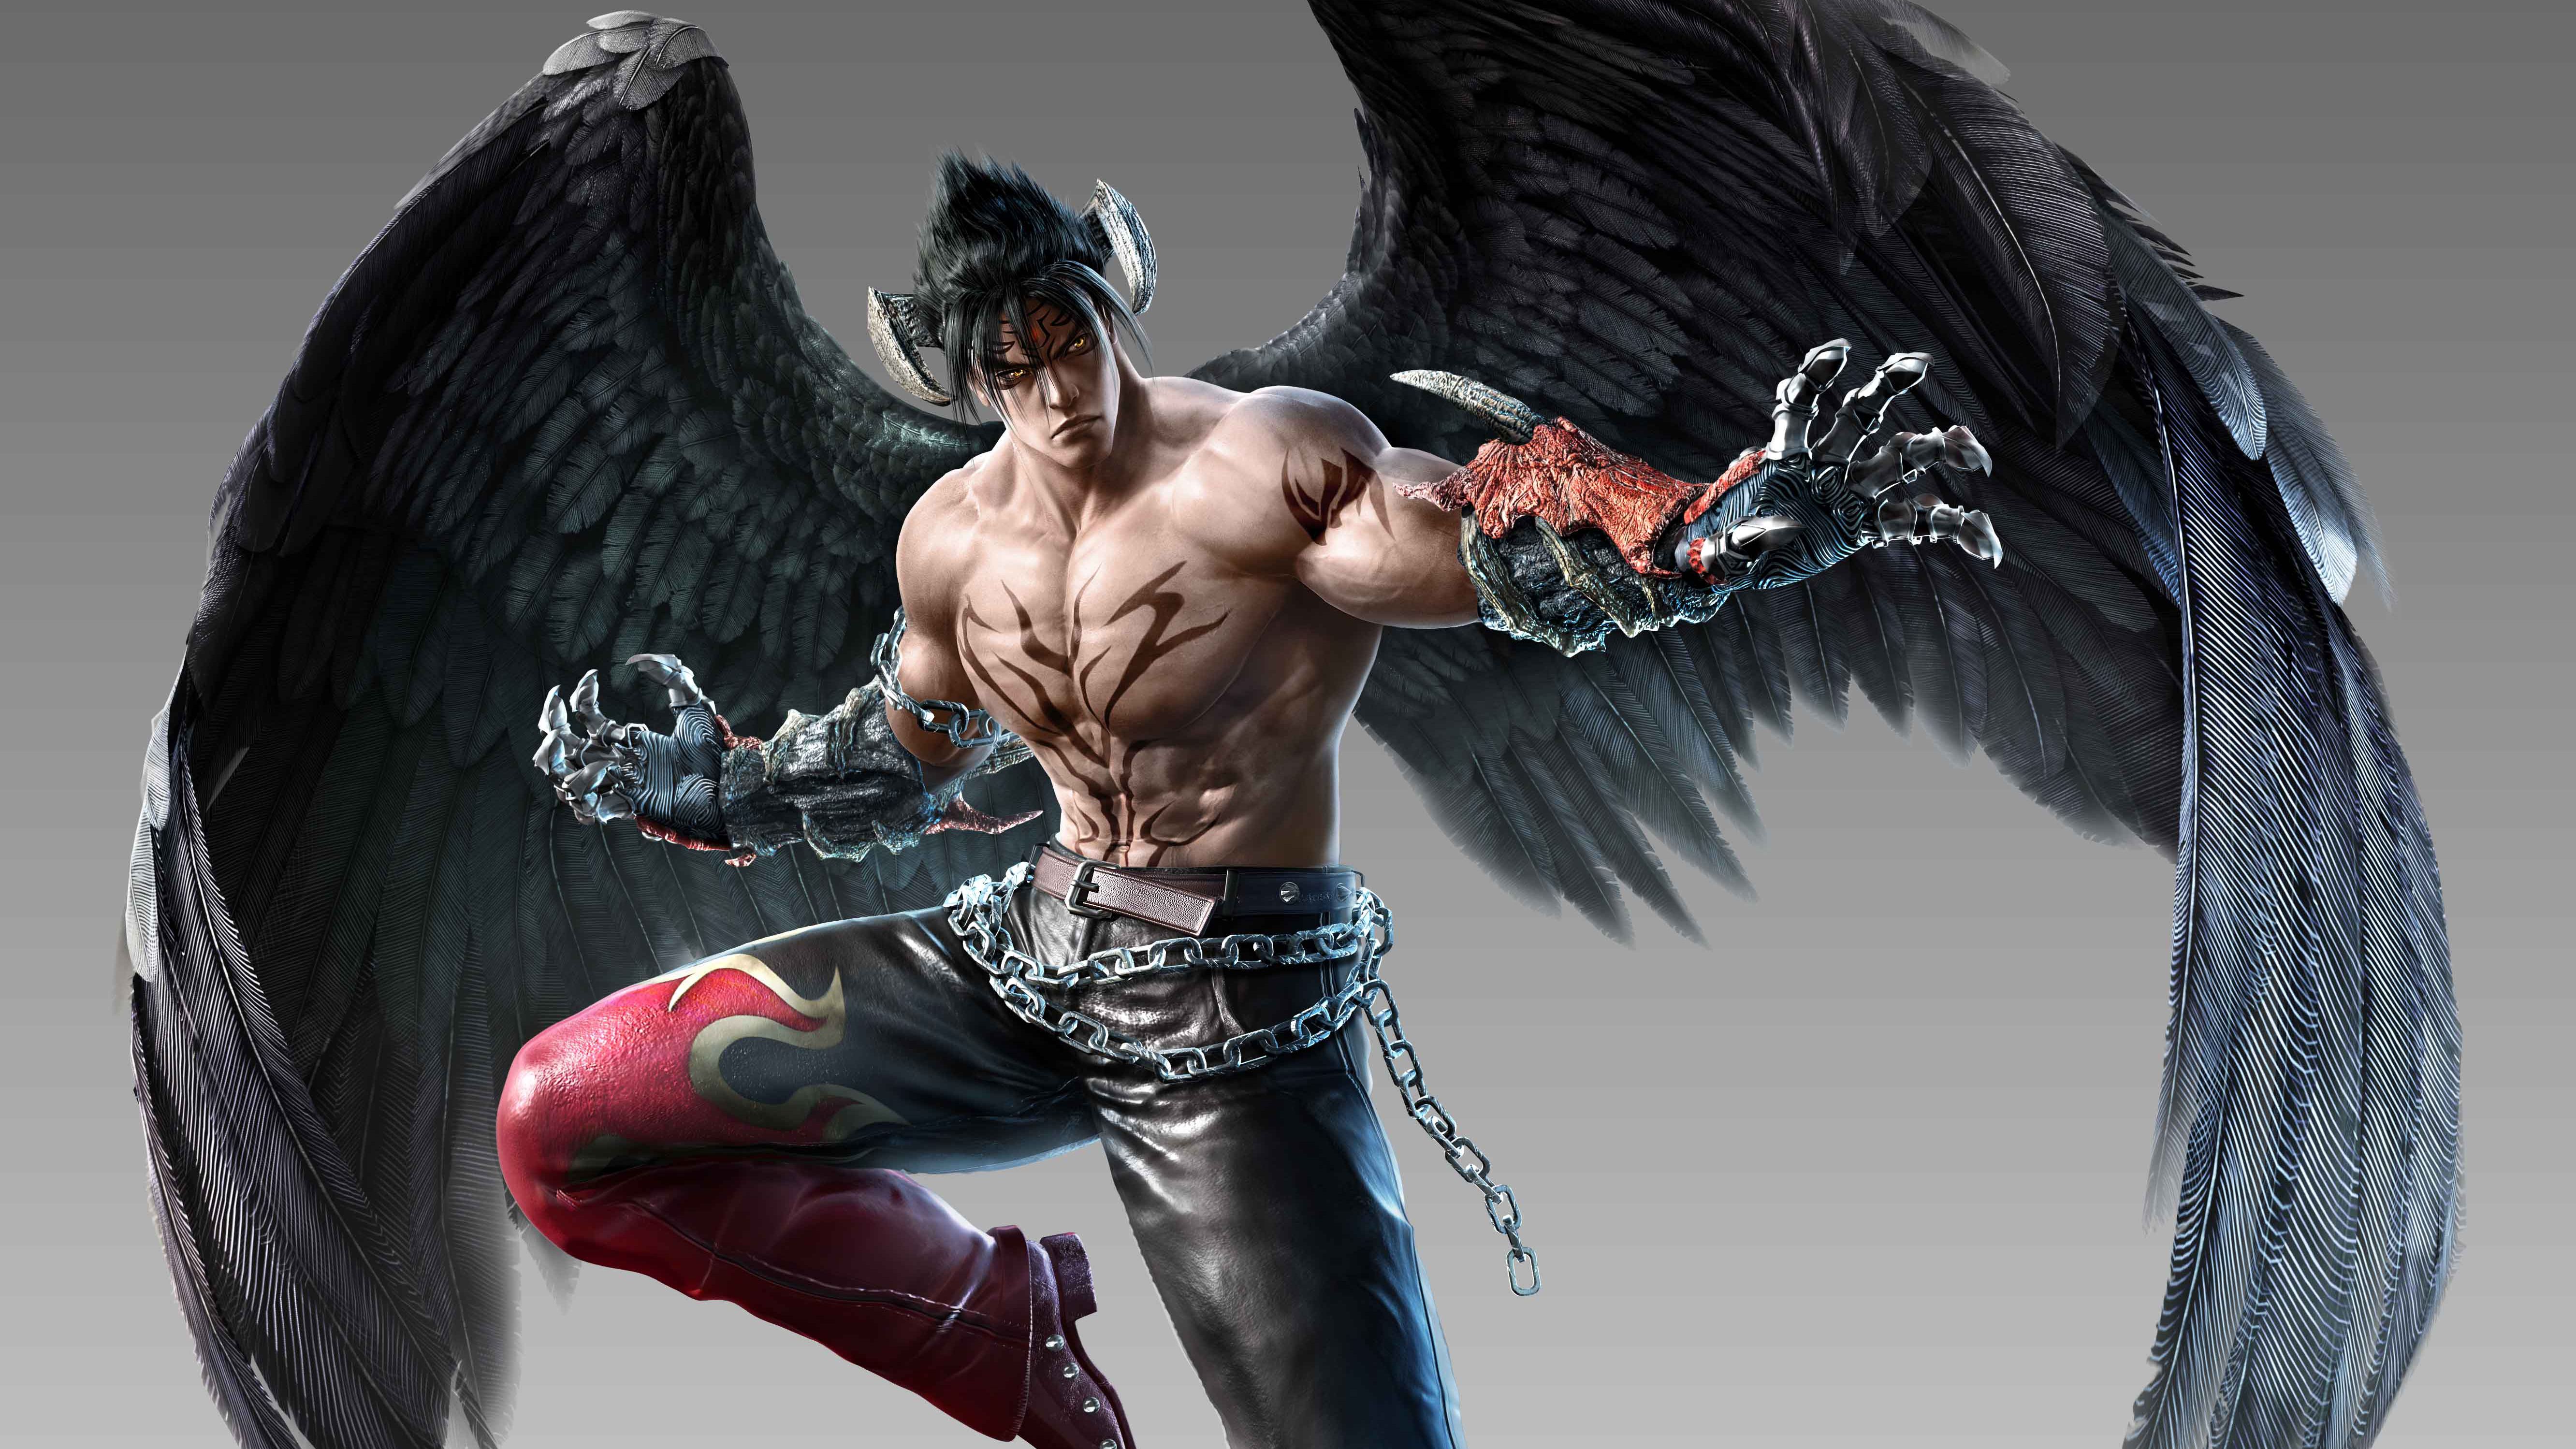 Jin Kazama Tekken 7 5k, HD Games, 4k Wallpaper, Image, Background